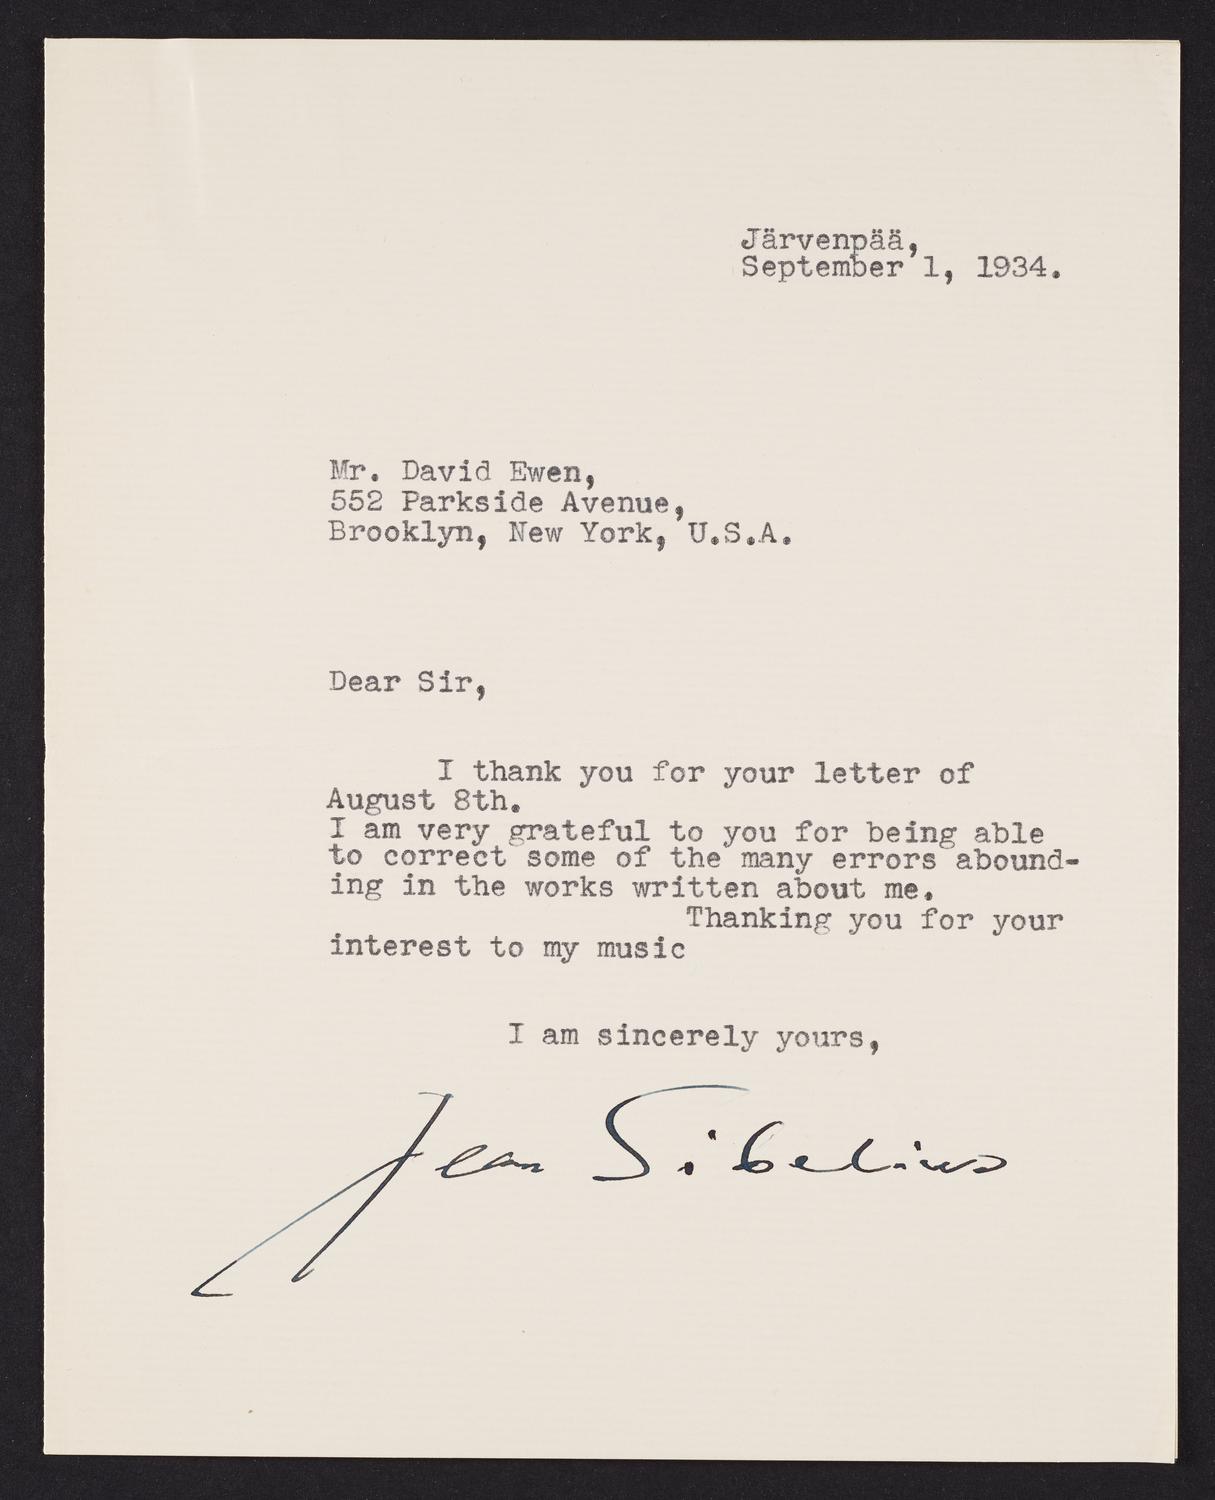 Correspondence from Jean Sibelius to David Ewen